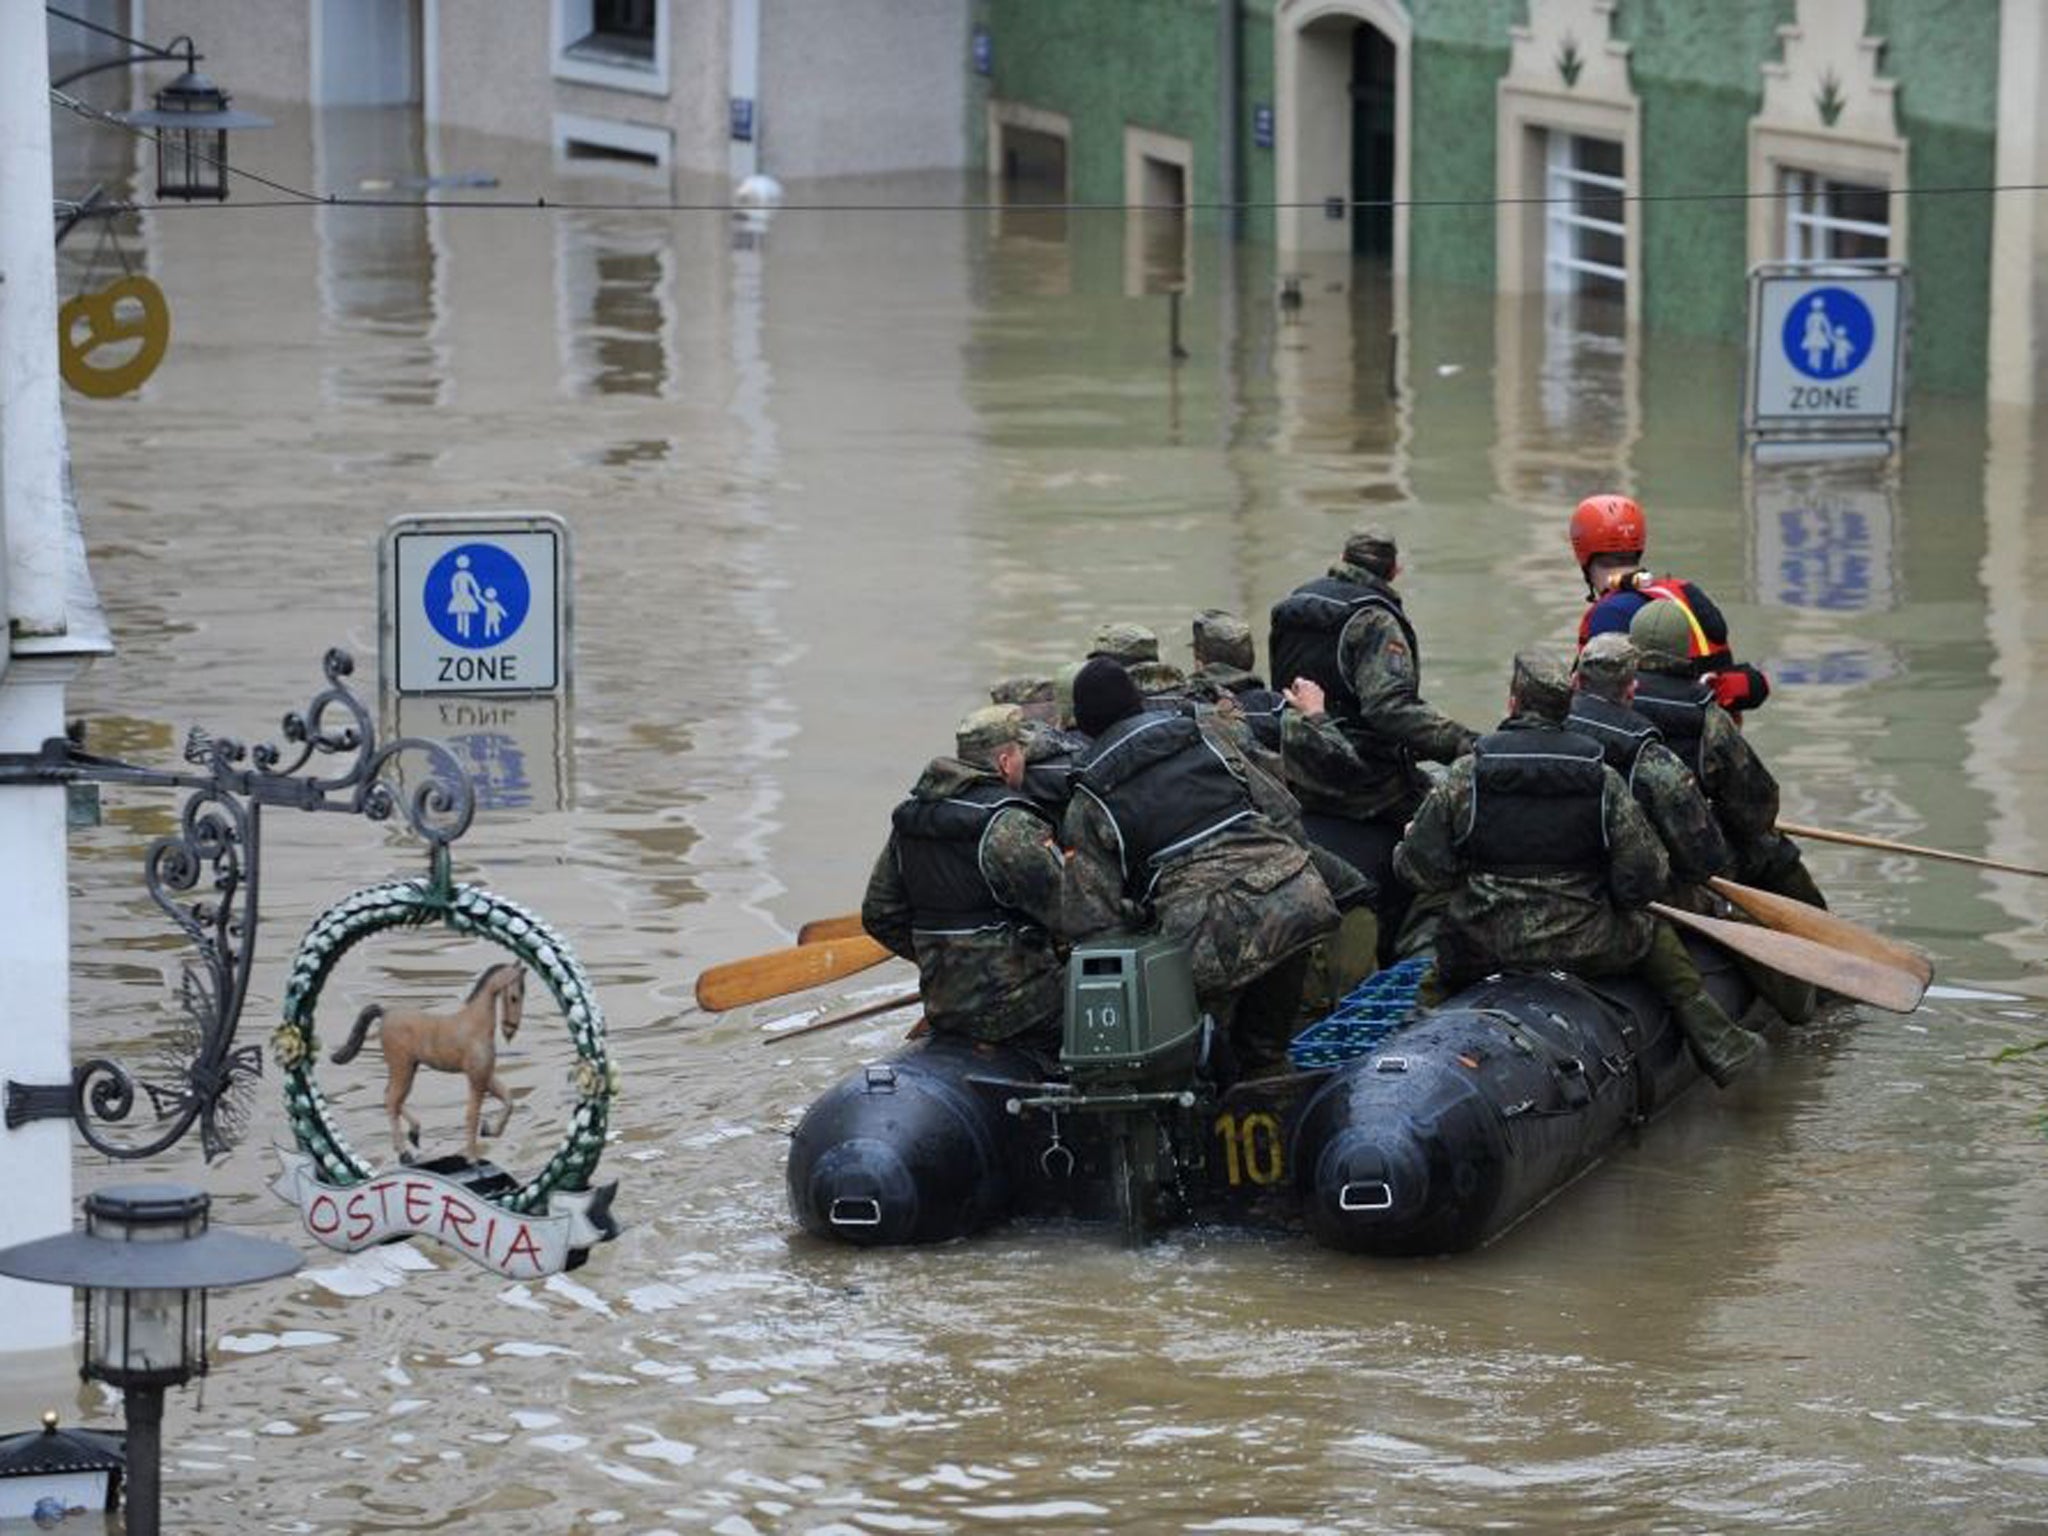 germany flood relief fund